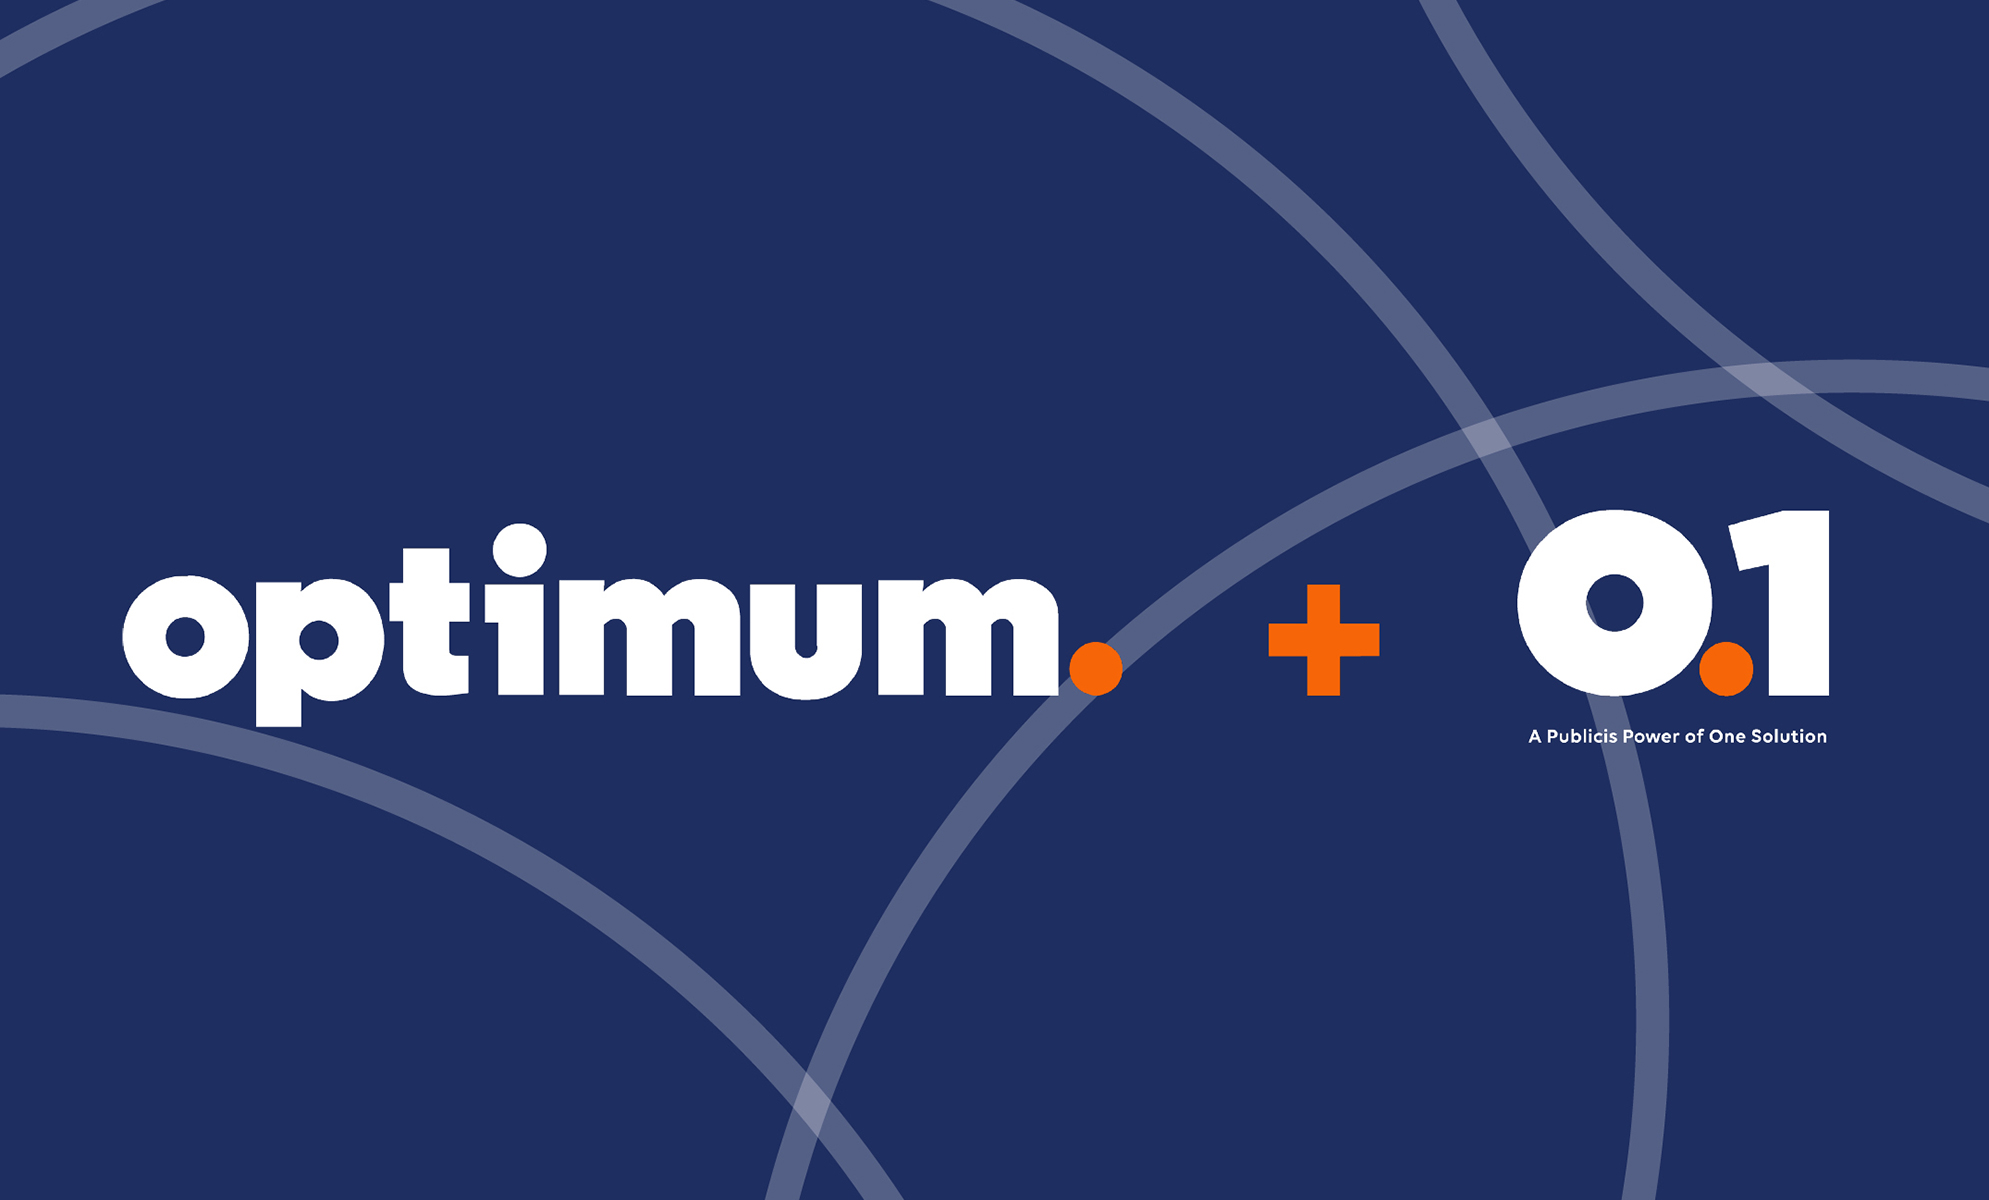 optimum x O1 logos with dark blue background